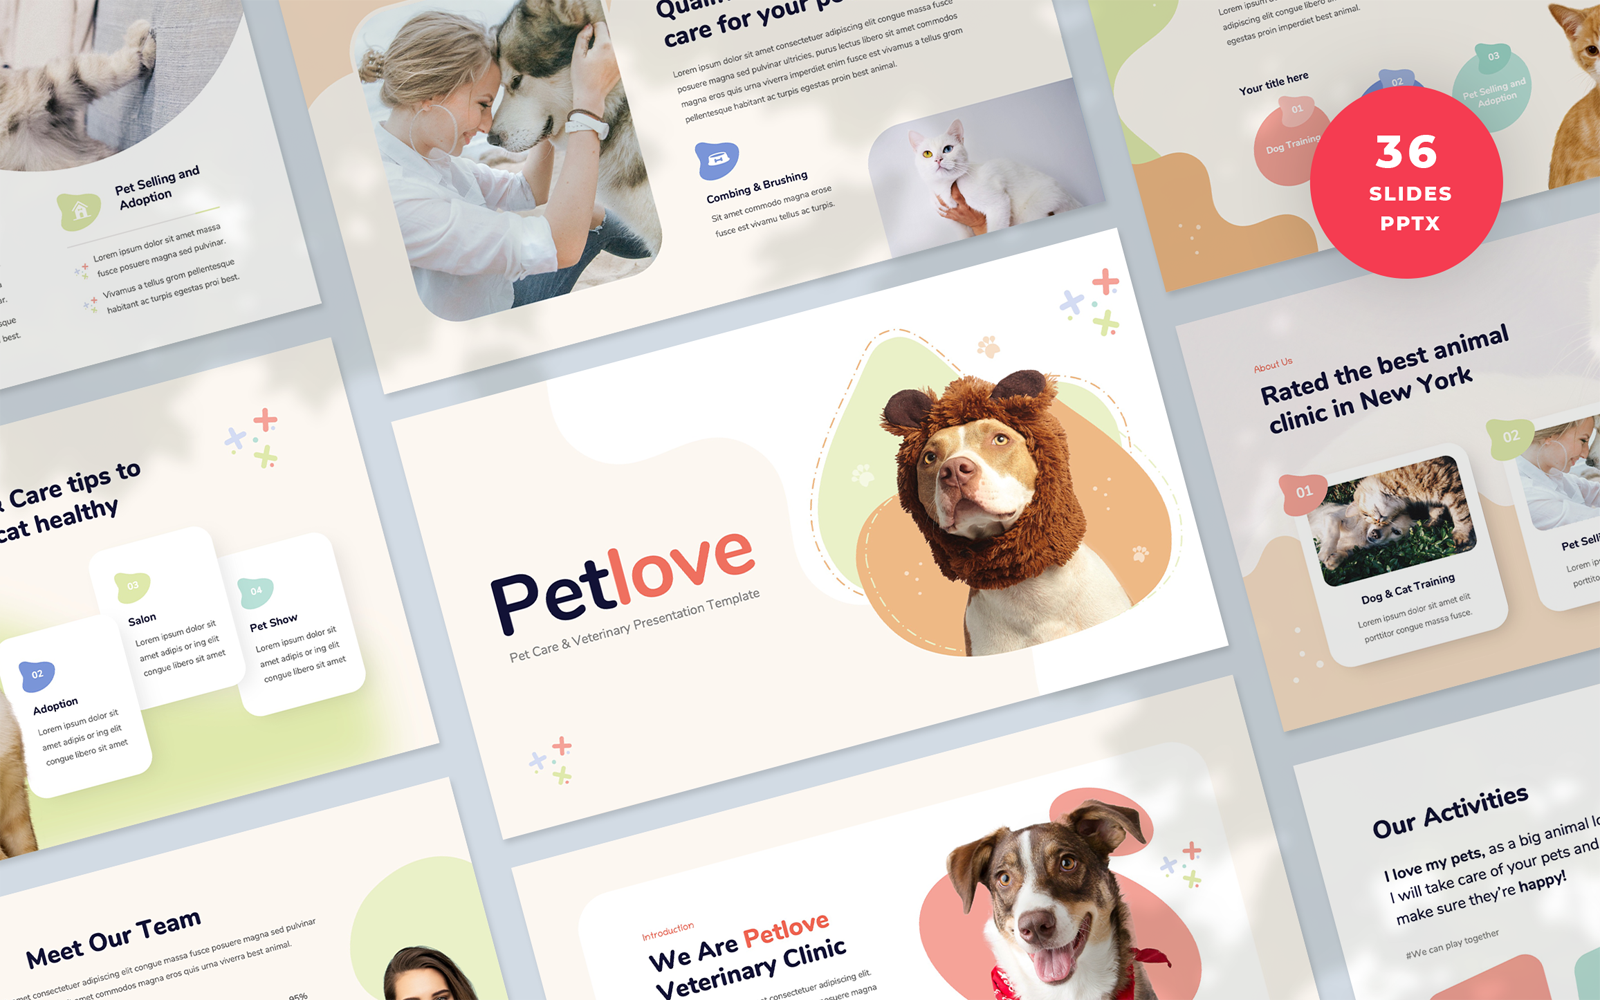 Petlove - Pet Care and Veterinary Presentation PowerPoint Template